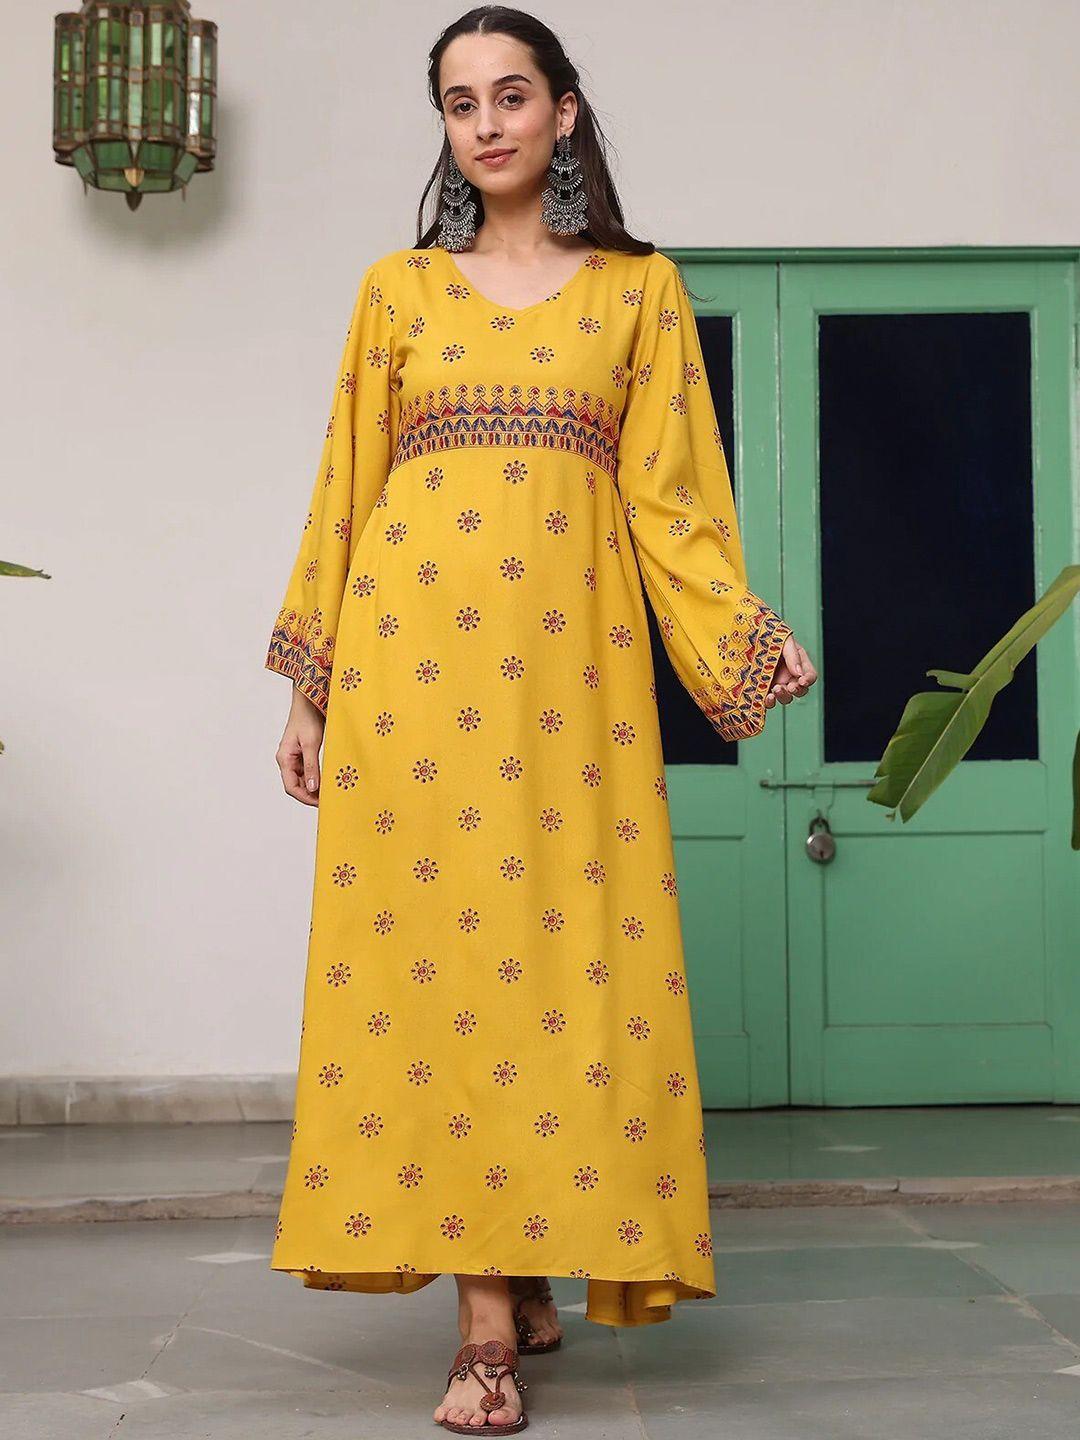 rustorange yellow ethnic motifs maxi dress